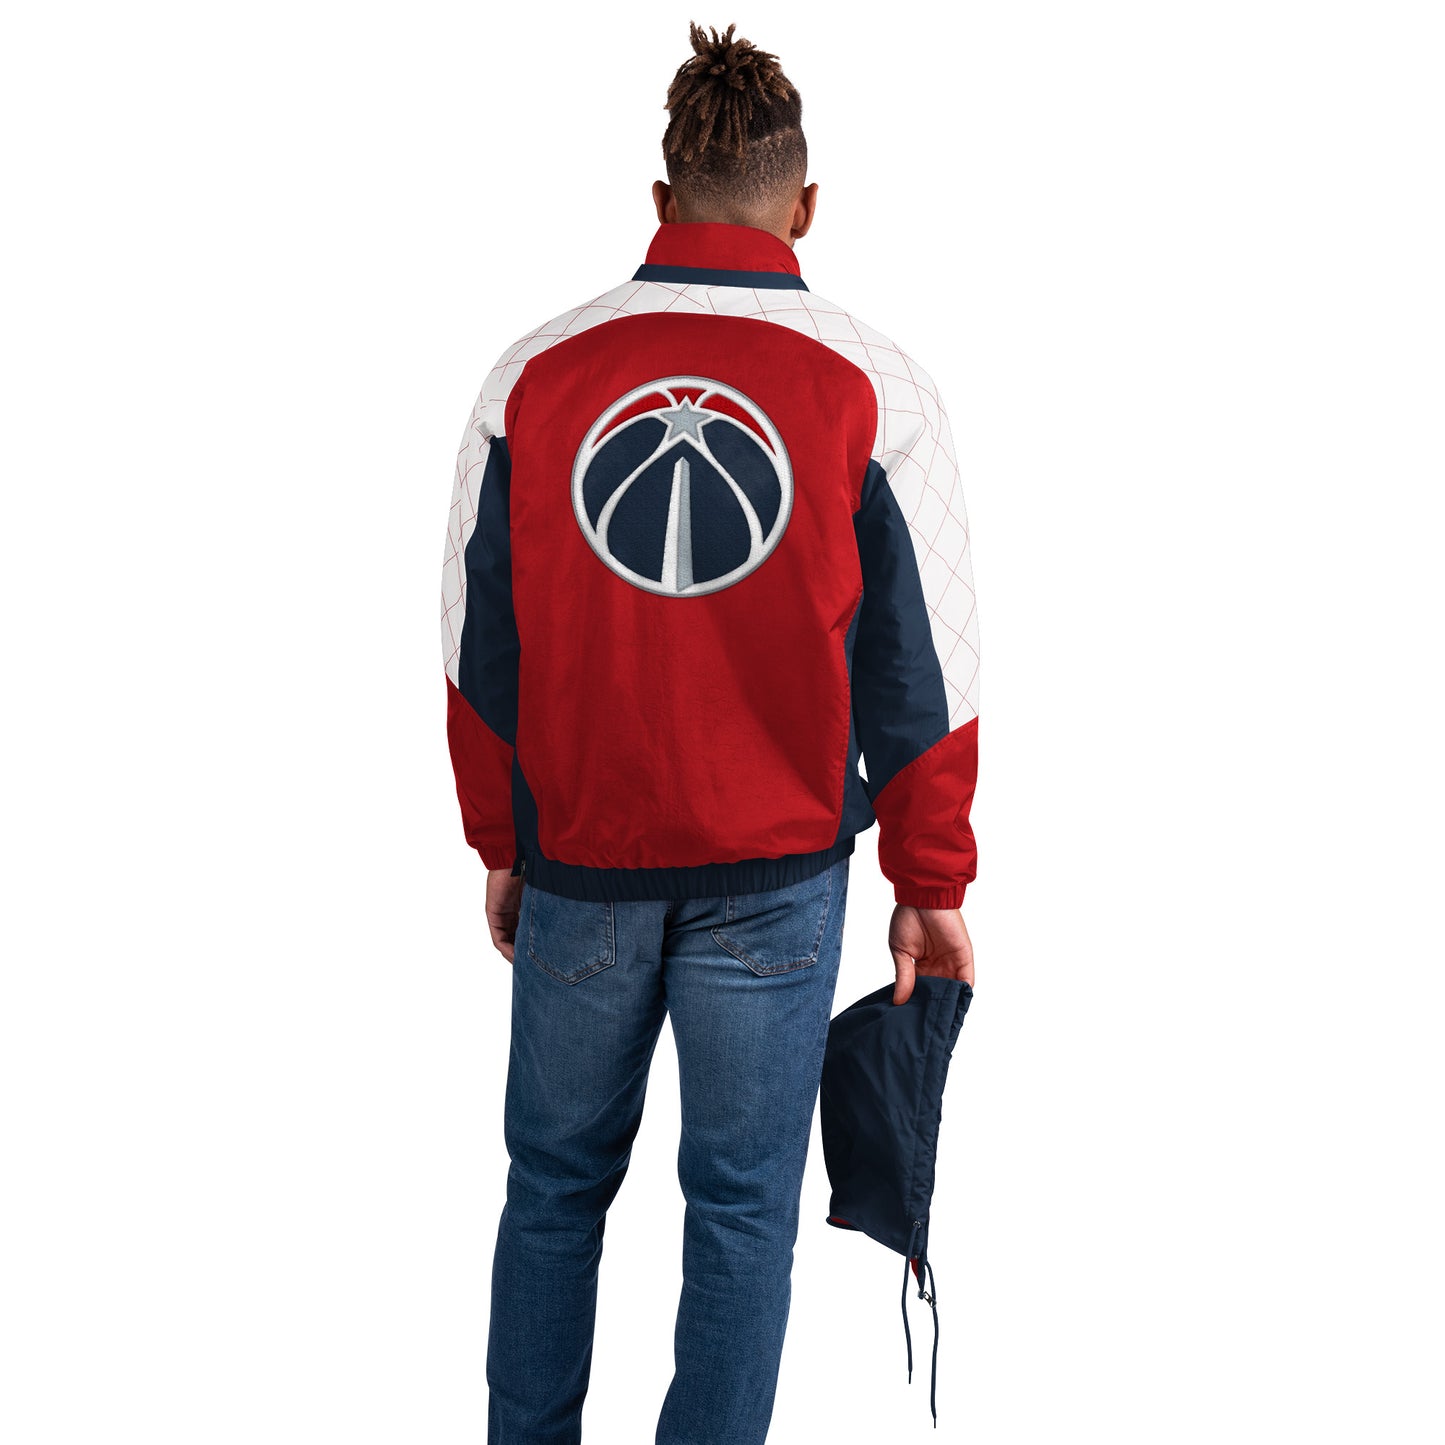 Washington Wizards Starter Body Check 1/2 Zip Pullover Men's Jacket